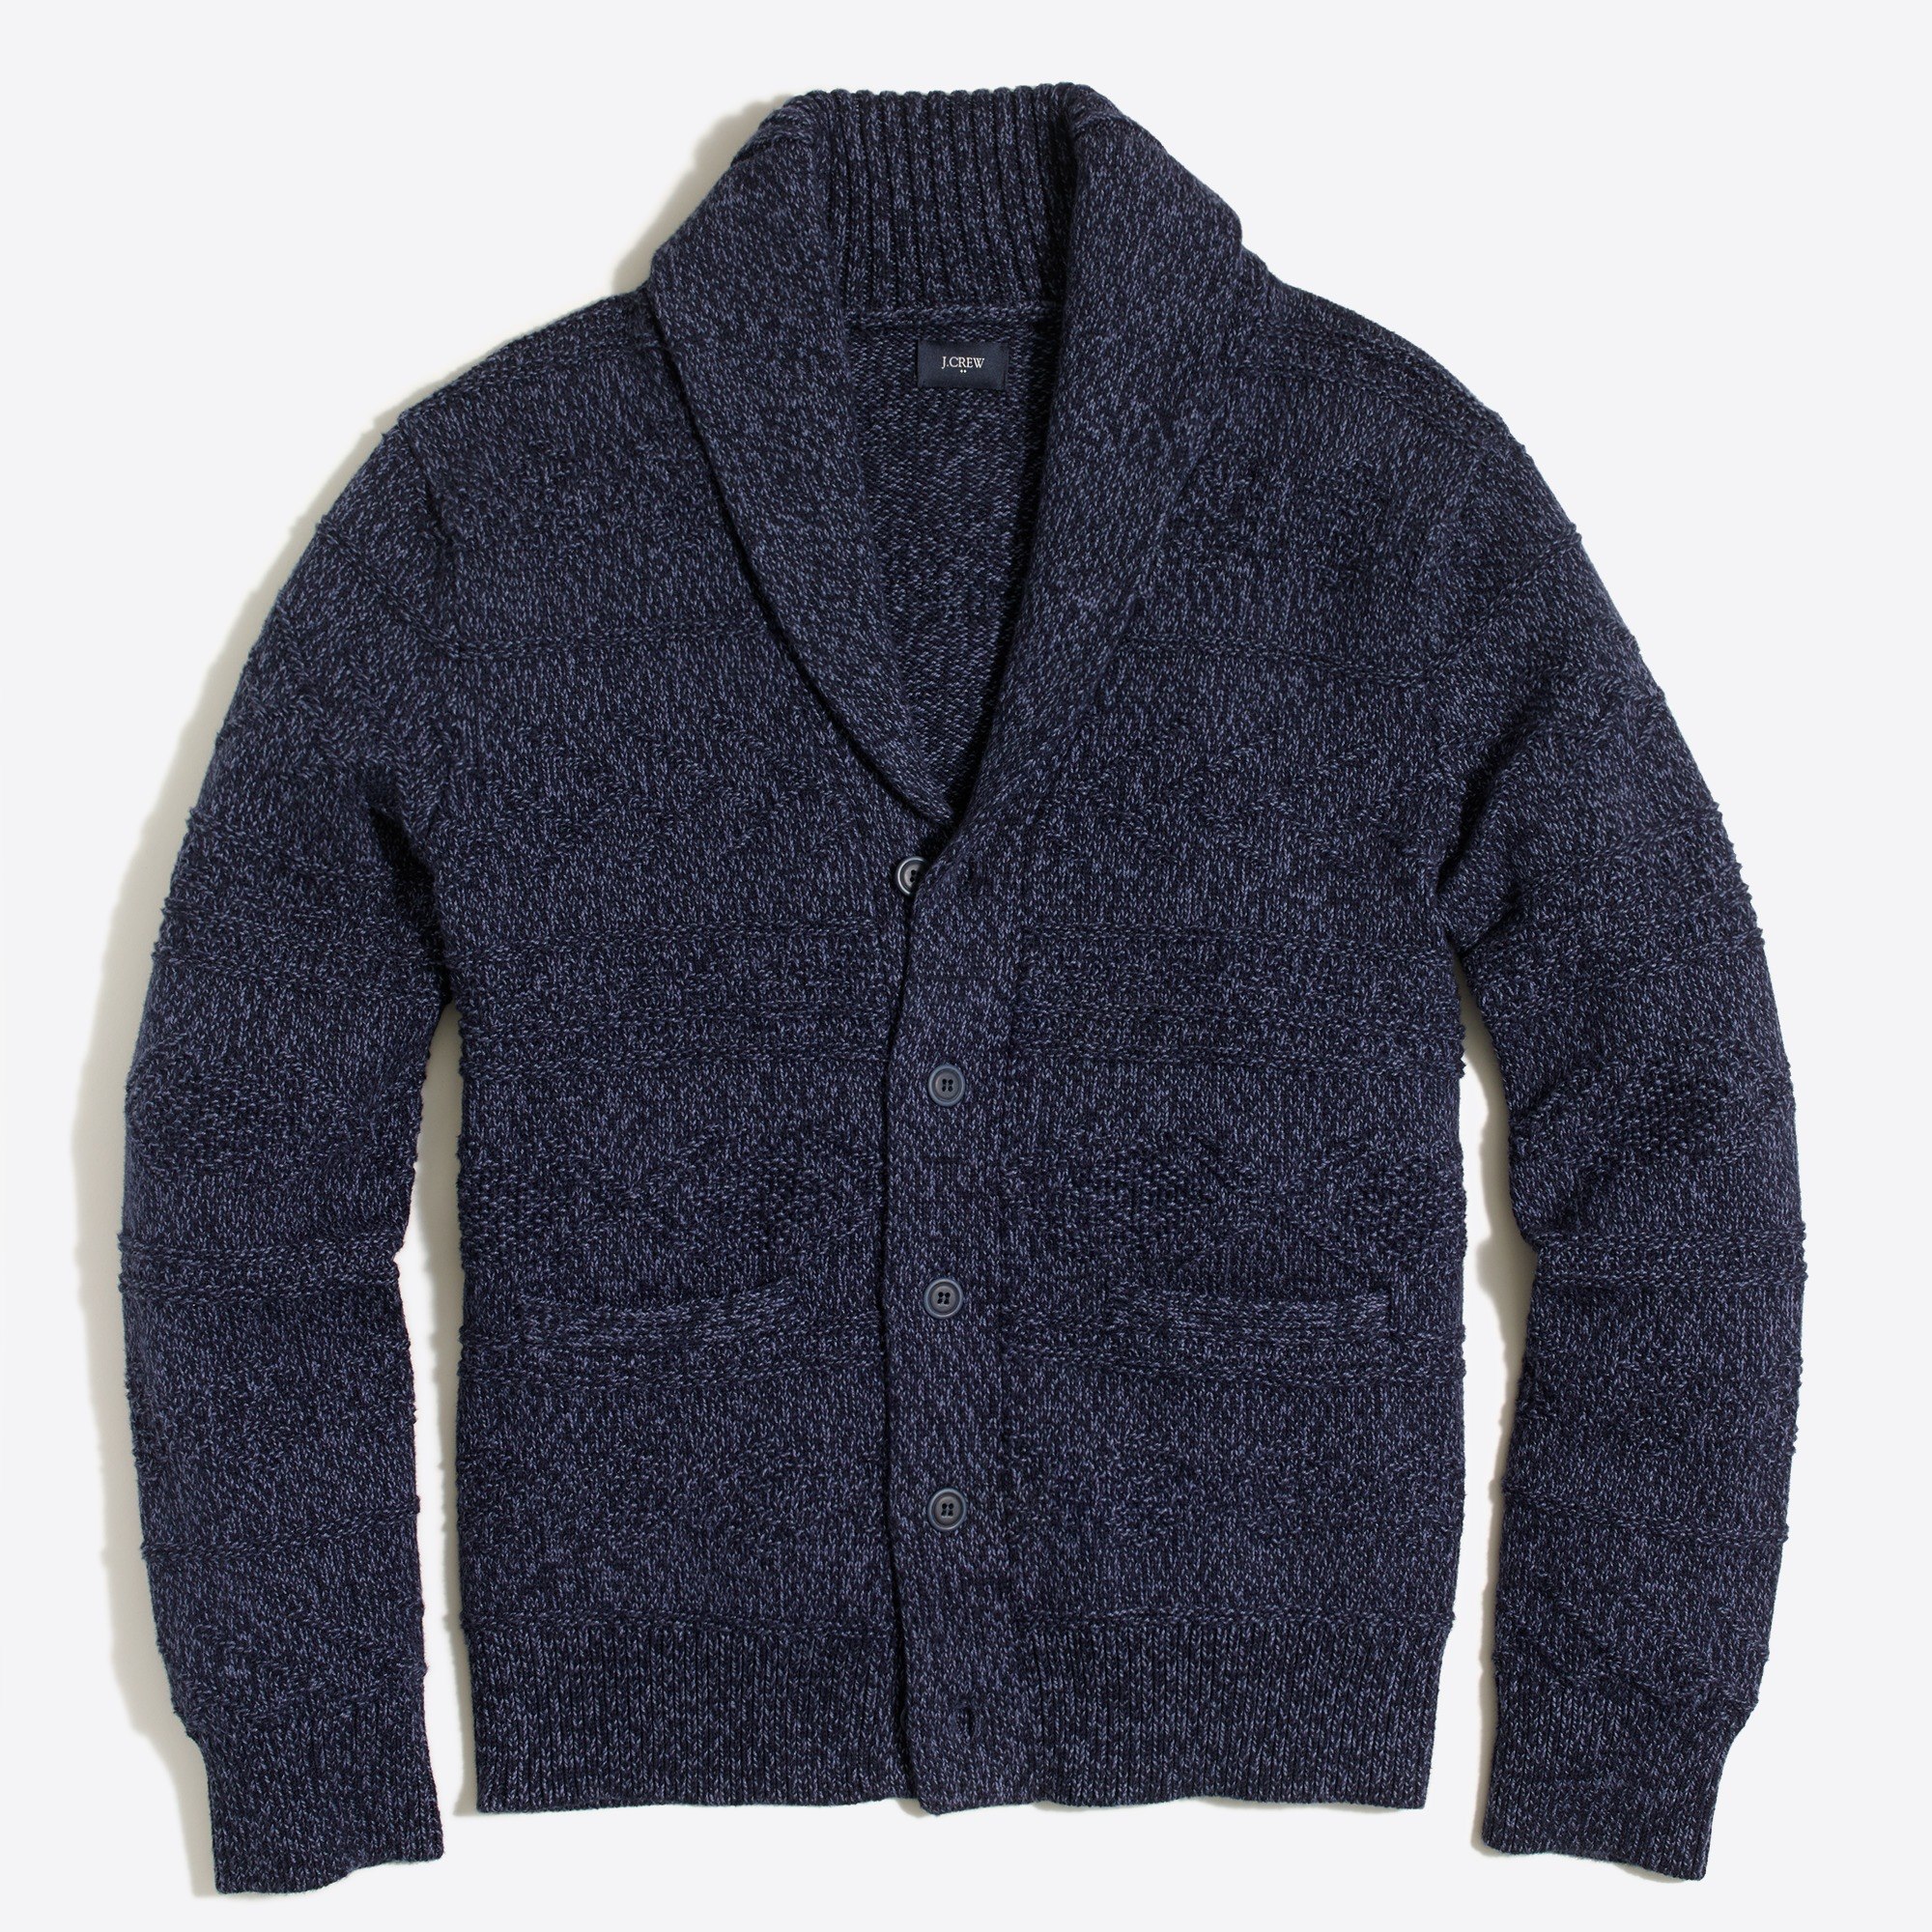 Cotton shawl-collar cardigan sweater : FactoryMen Cardigan | Factory